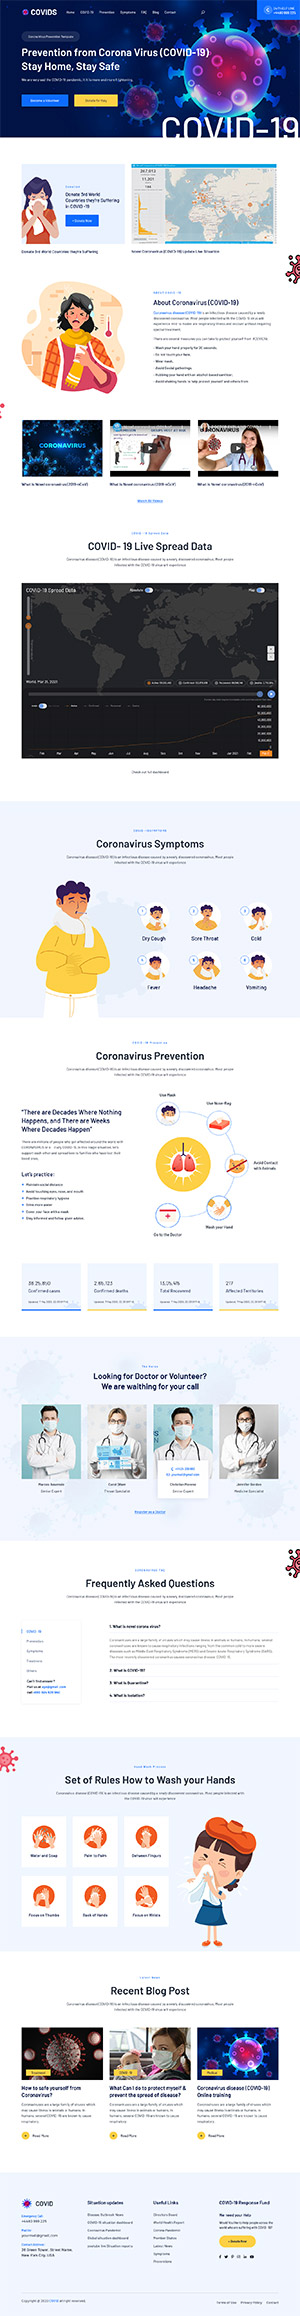 Coronavirus (COVID-19) Social Awareness and Medical Prevention 